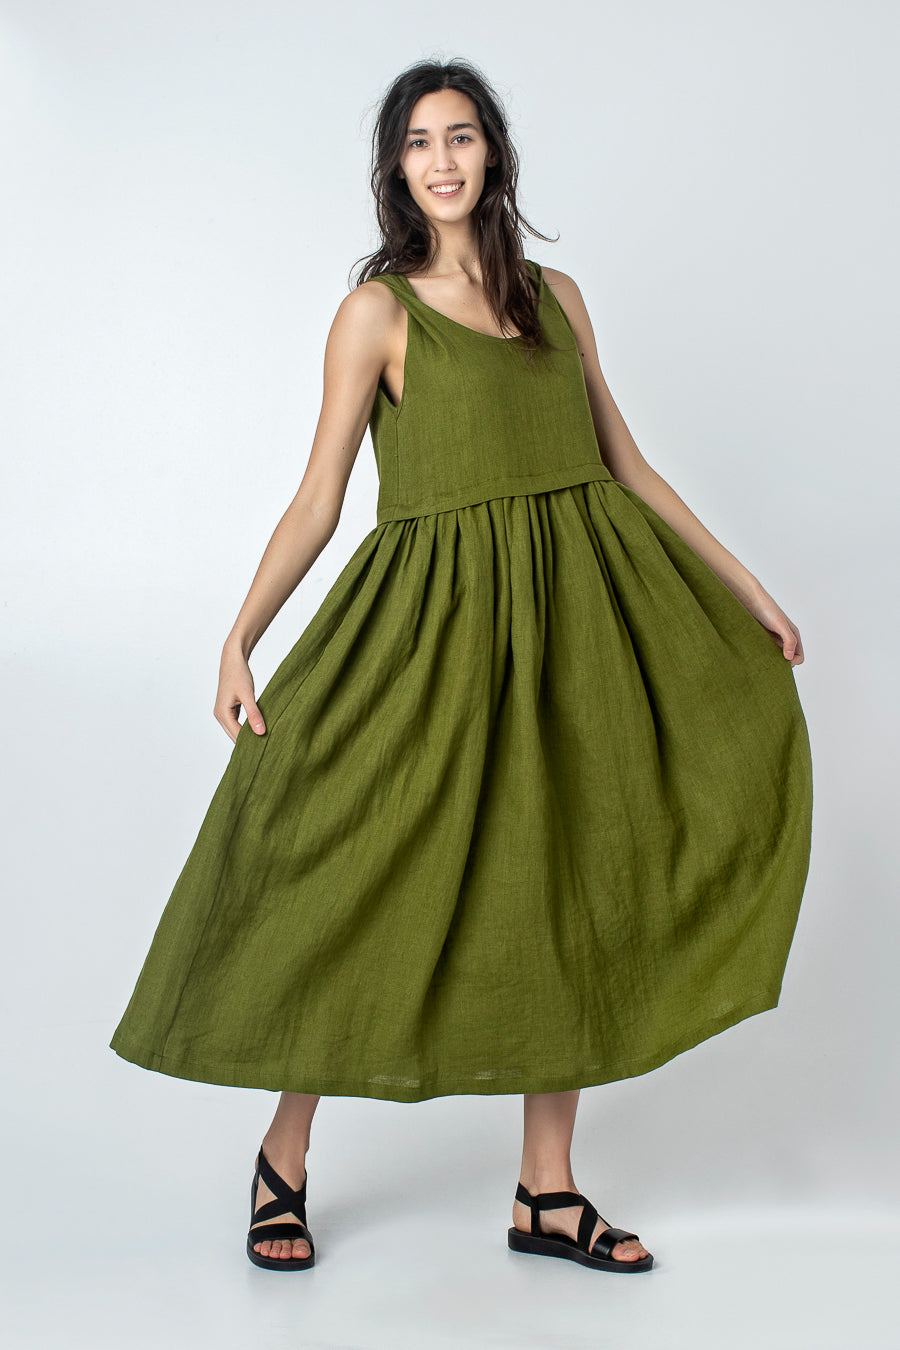 KUKLIA | Linen dress with pockets - Mezzoroni